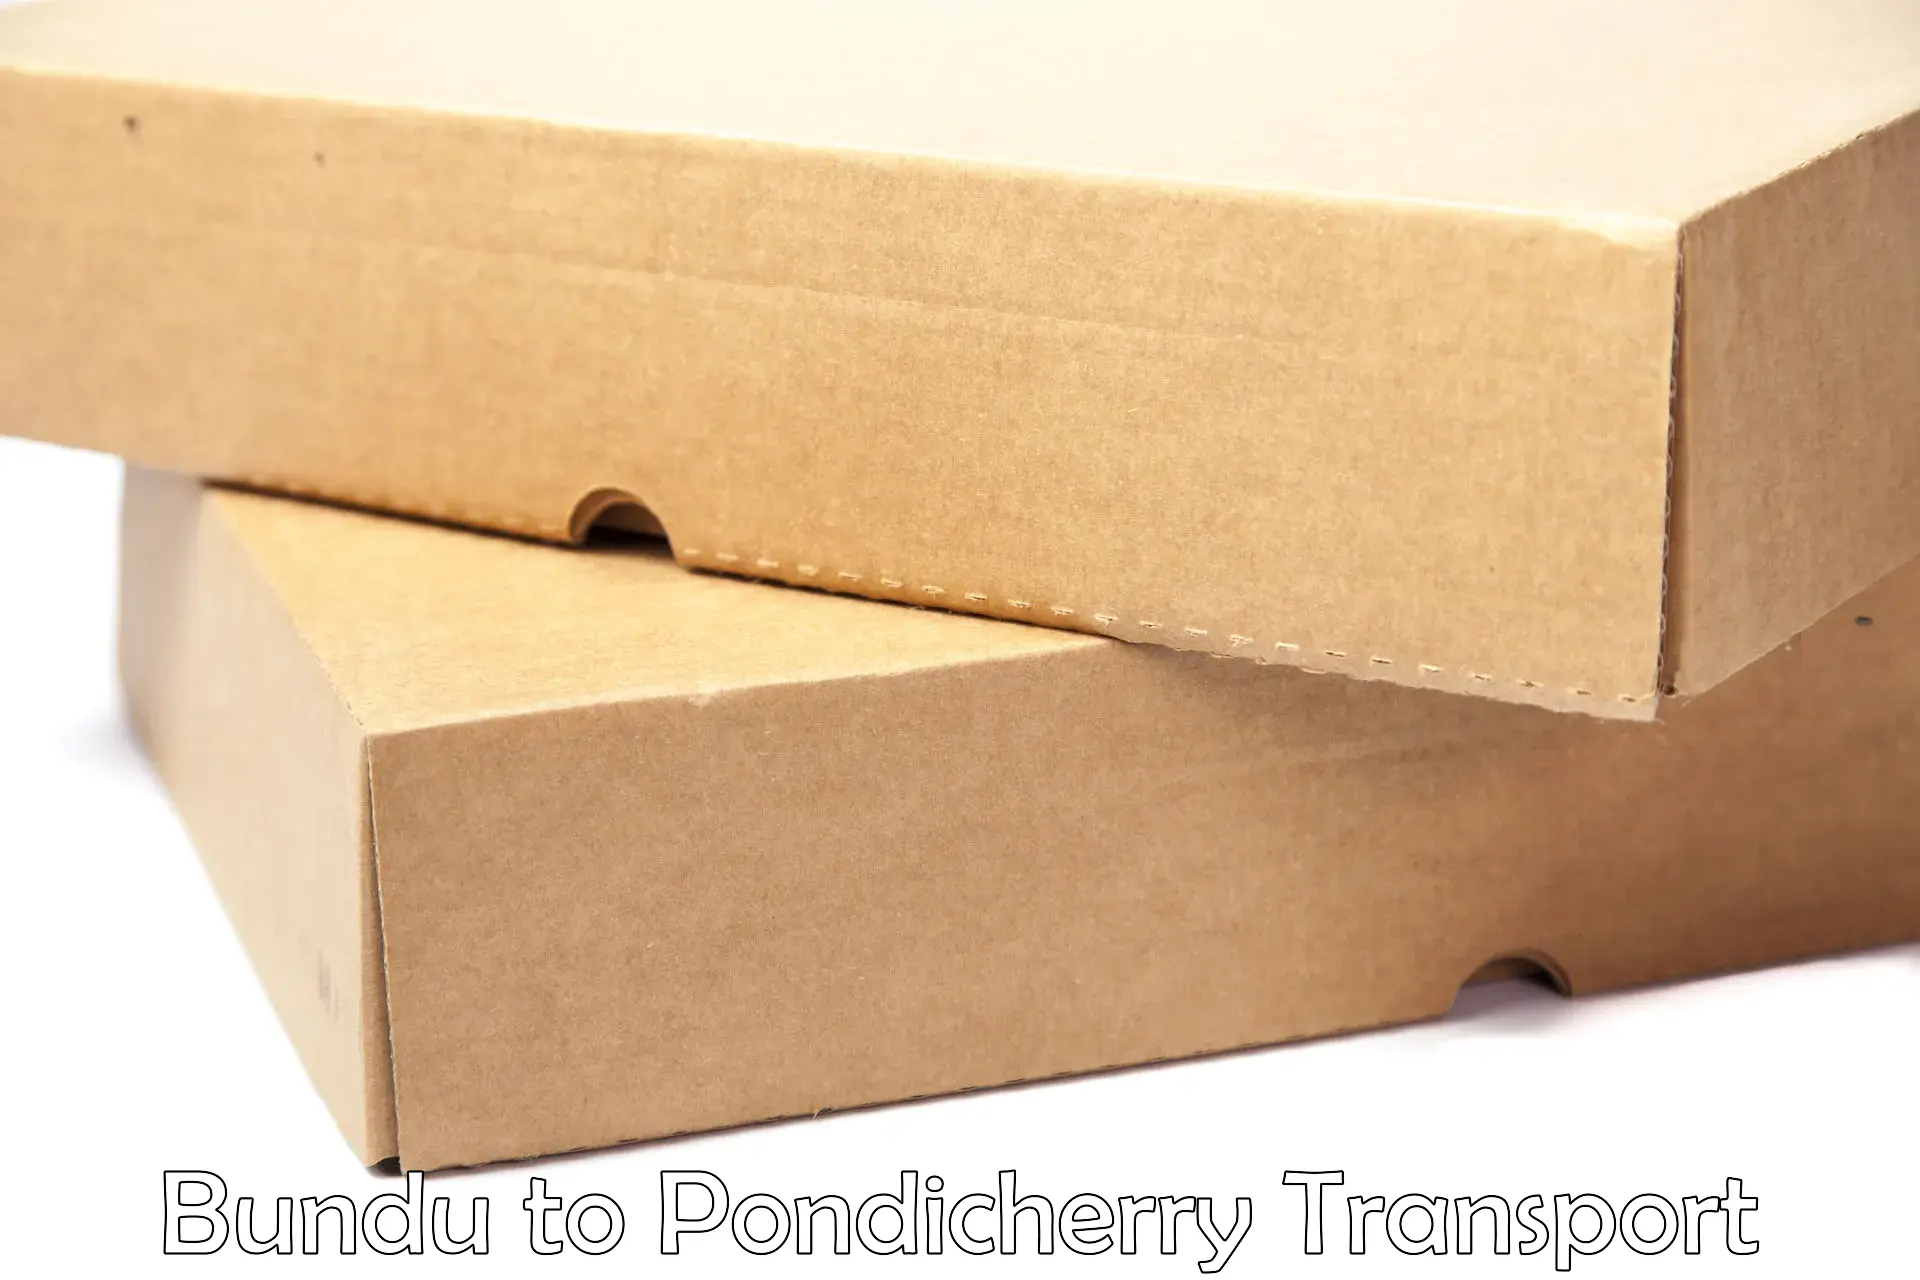 Vehicle transport services Bundu to Pondicherry University